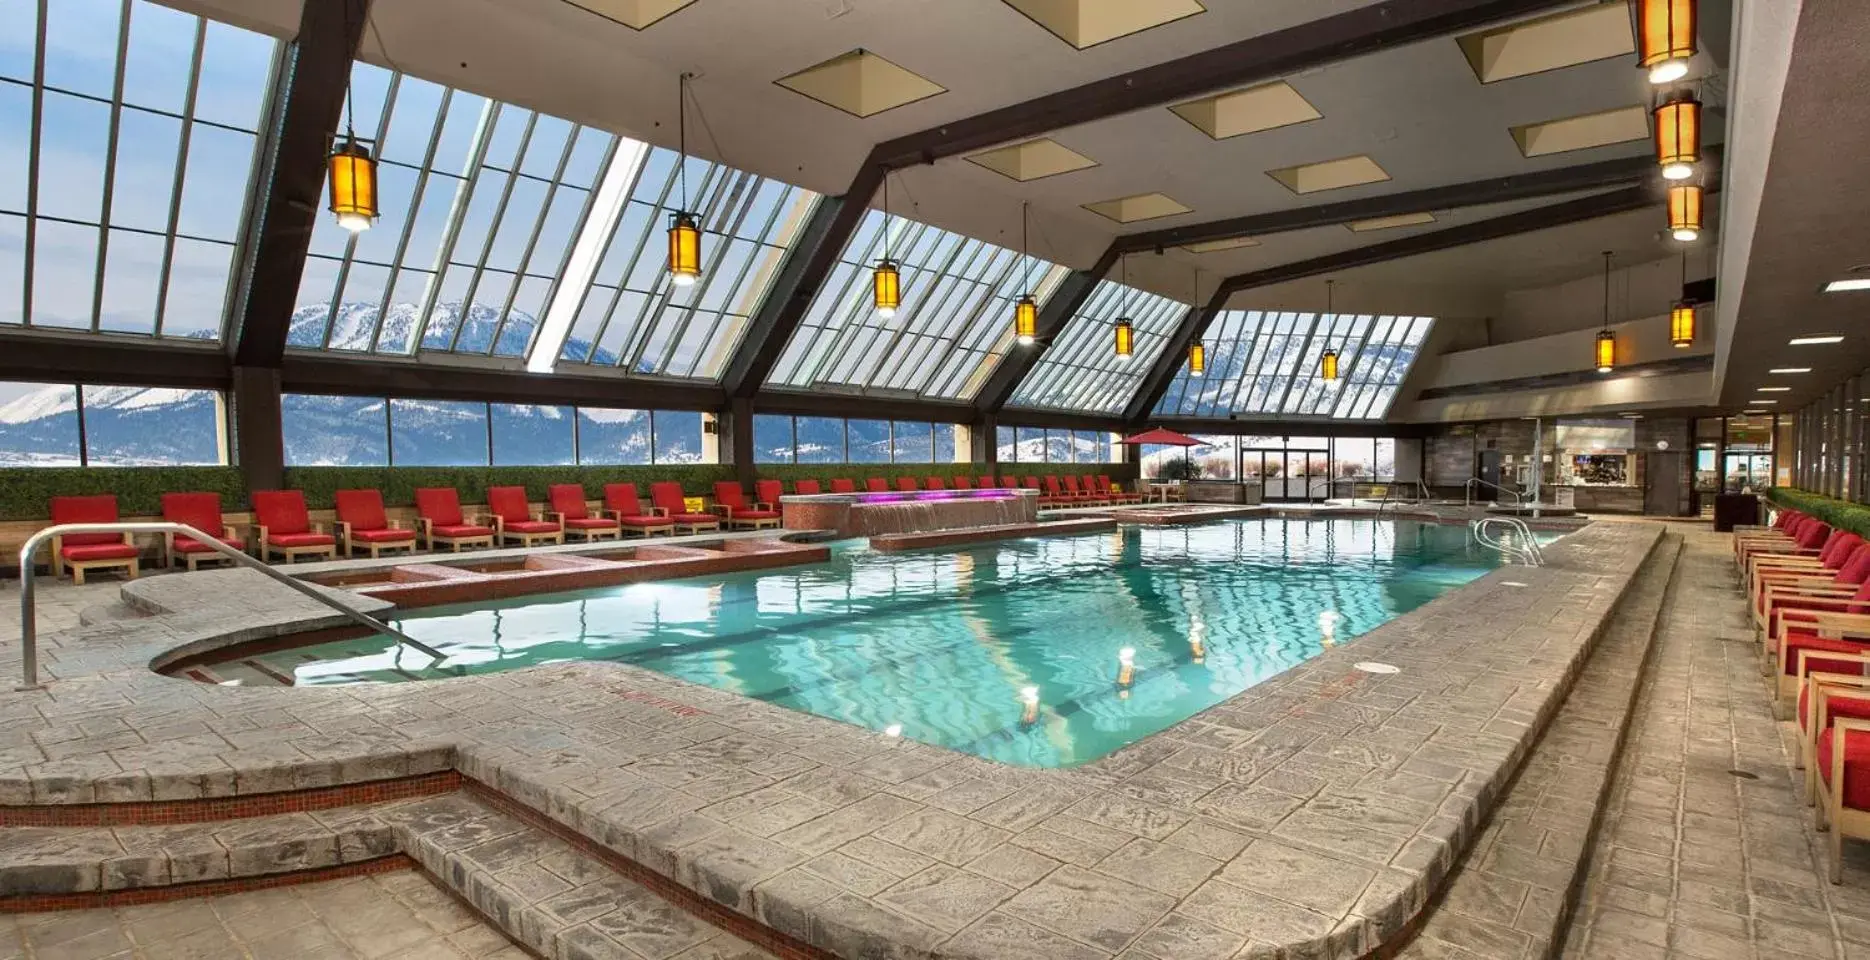 Swimming Pool in Nugget Casino Resort